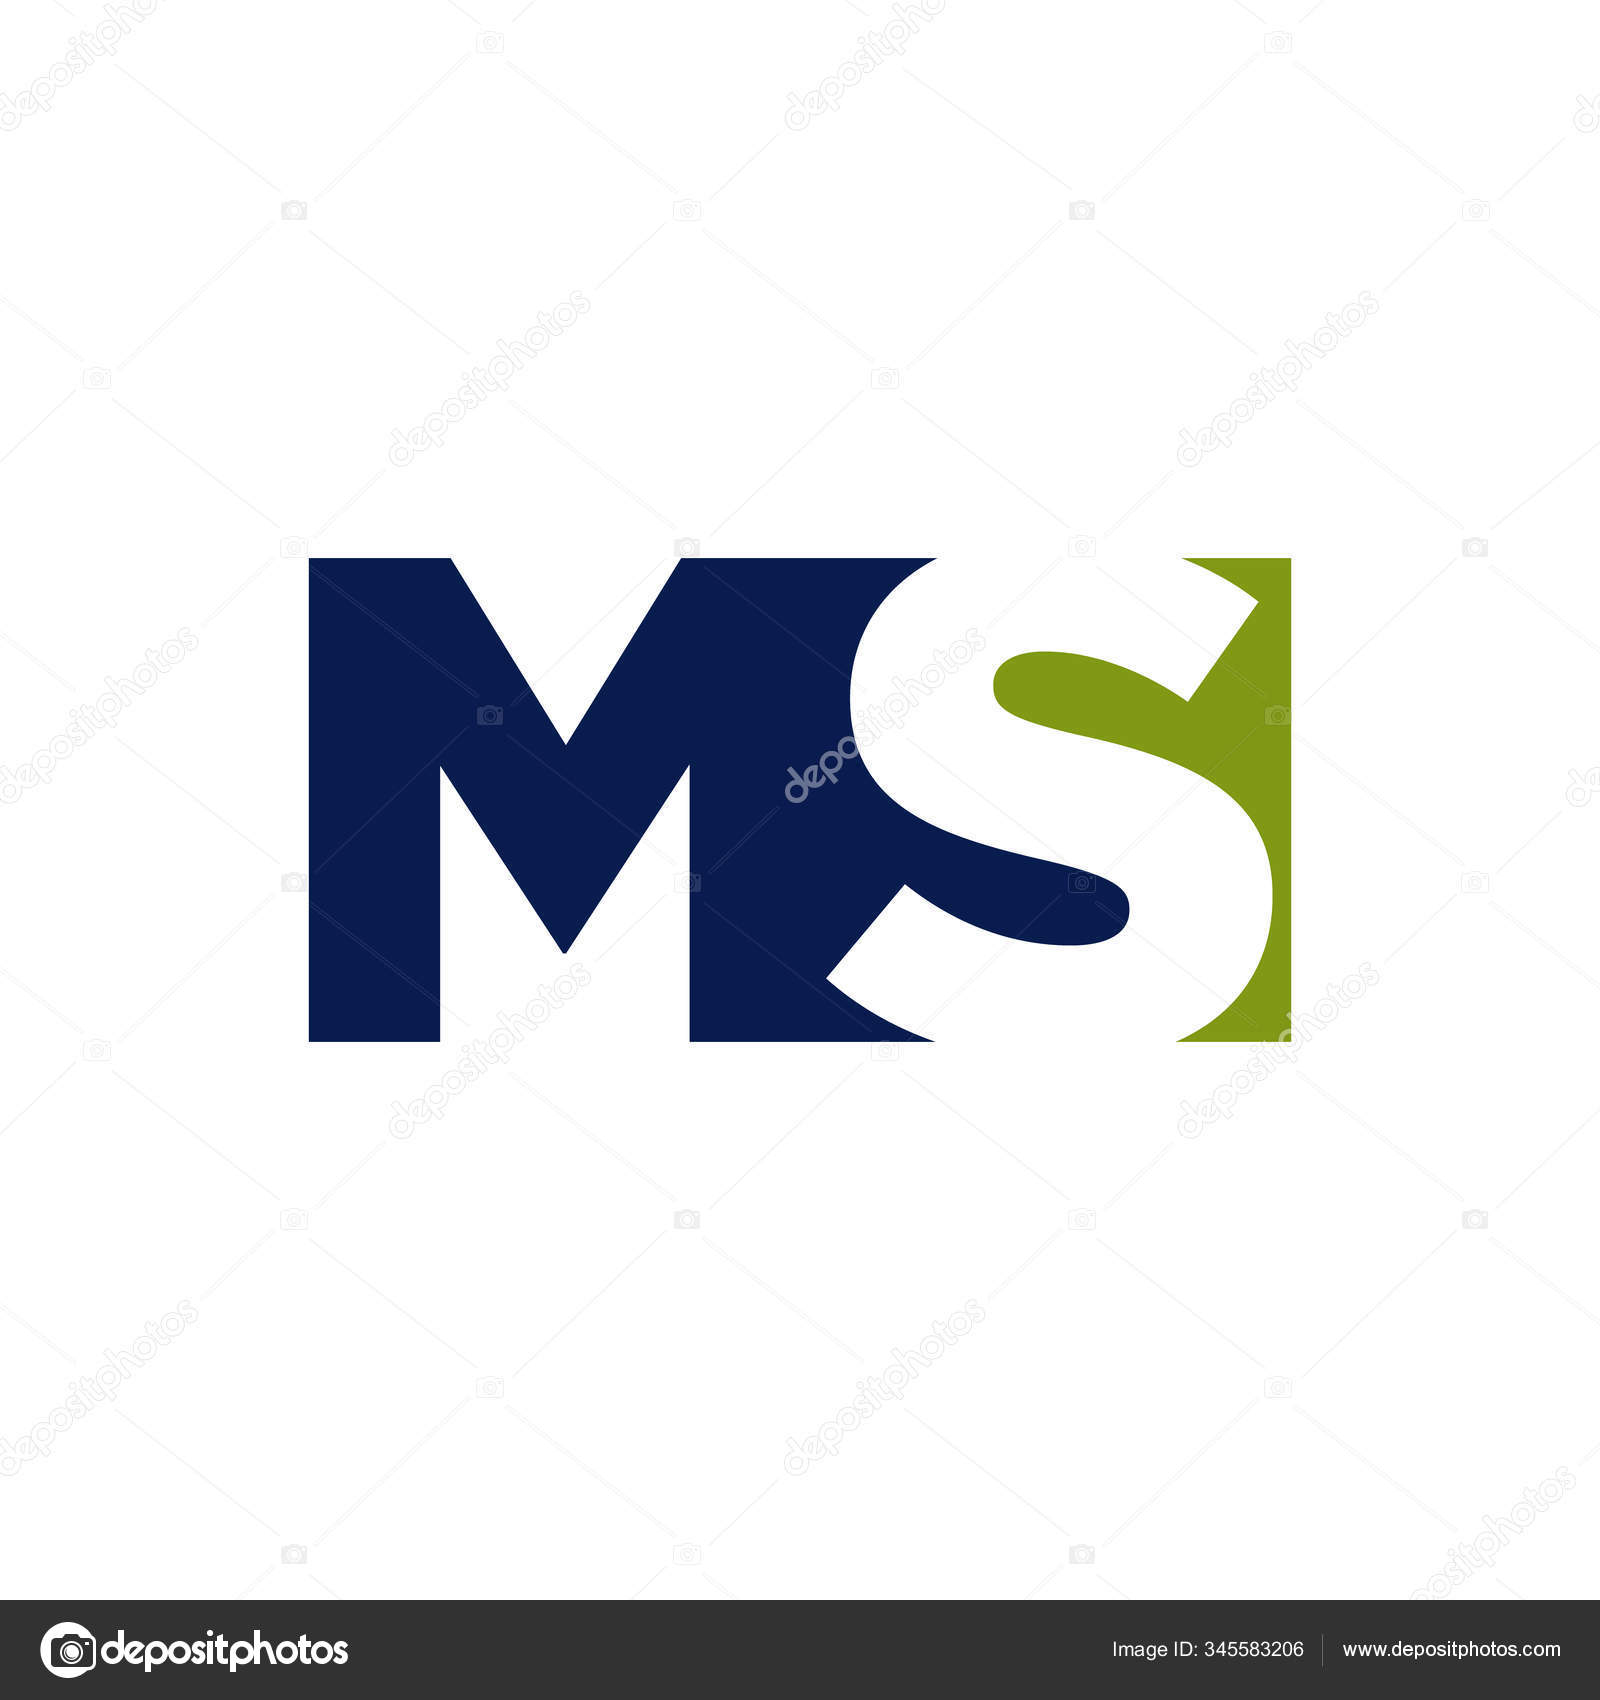 1 586 Ms Logo Vector Images Free Royalty Free Ms Logo Vectors Depositphotos